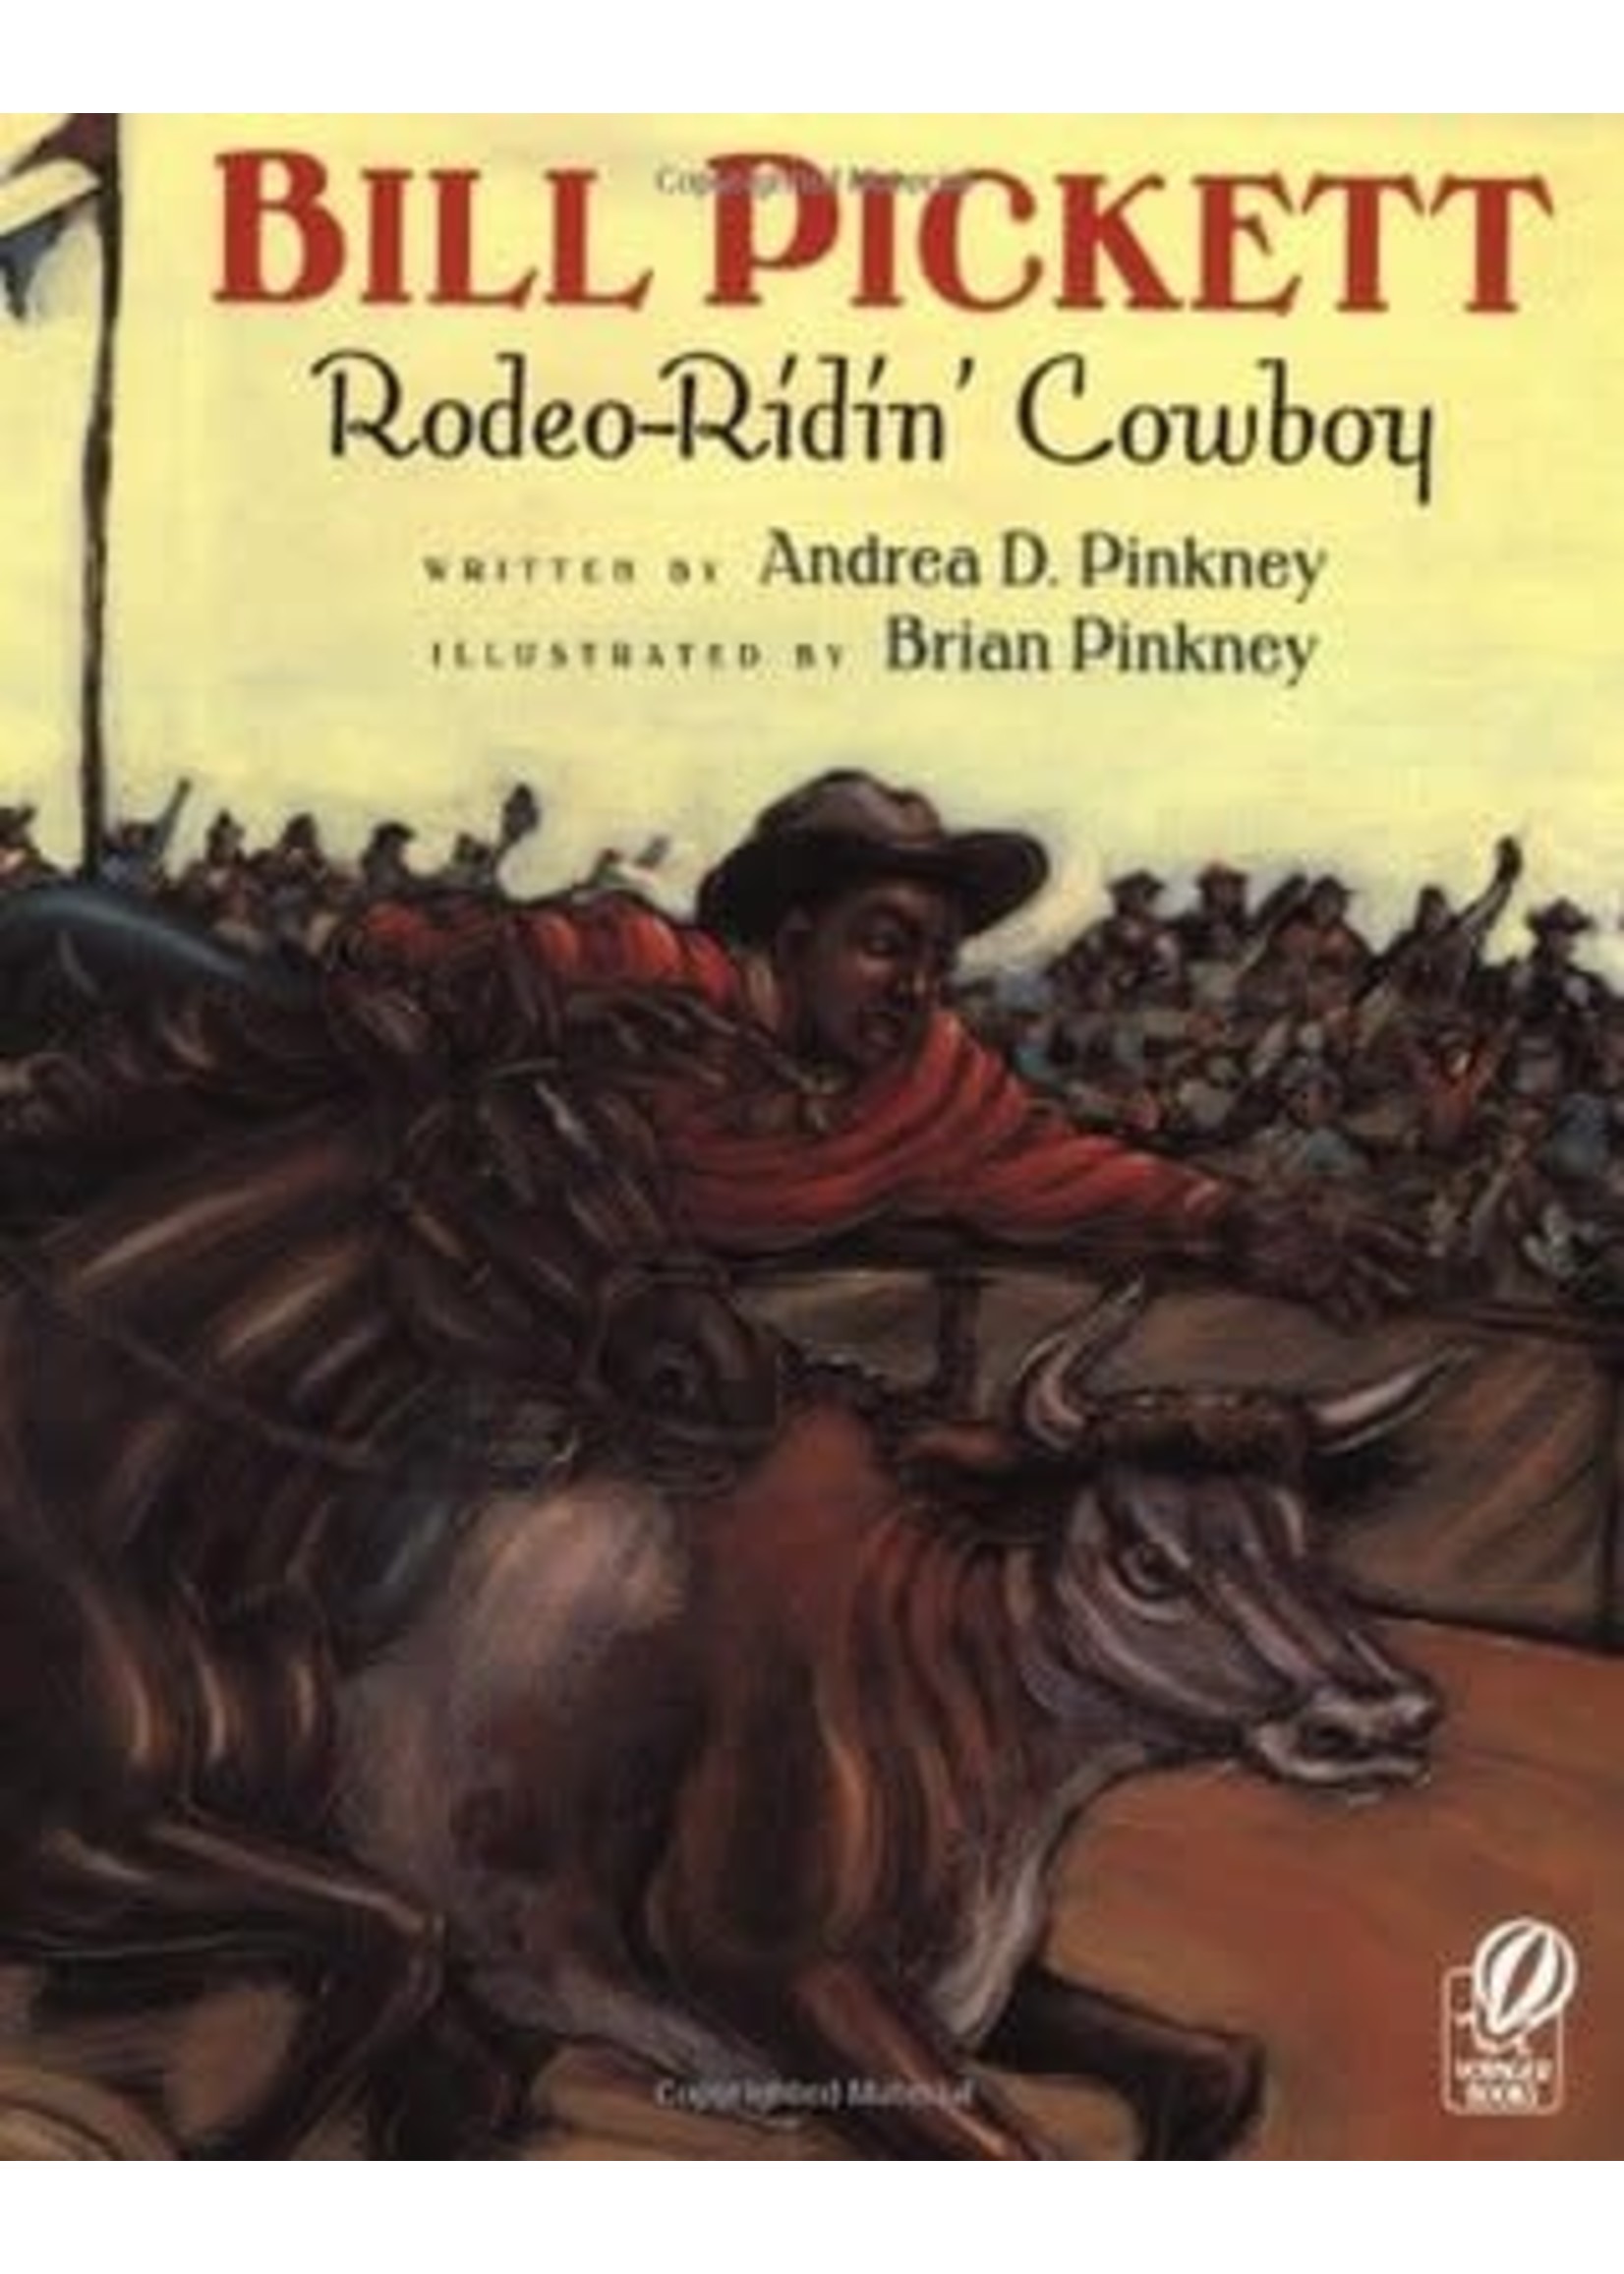 Bill Pickett: Rodeo-Ridin' Cowboy by Andrea Davis Pinkney, Brian Pinkney